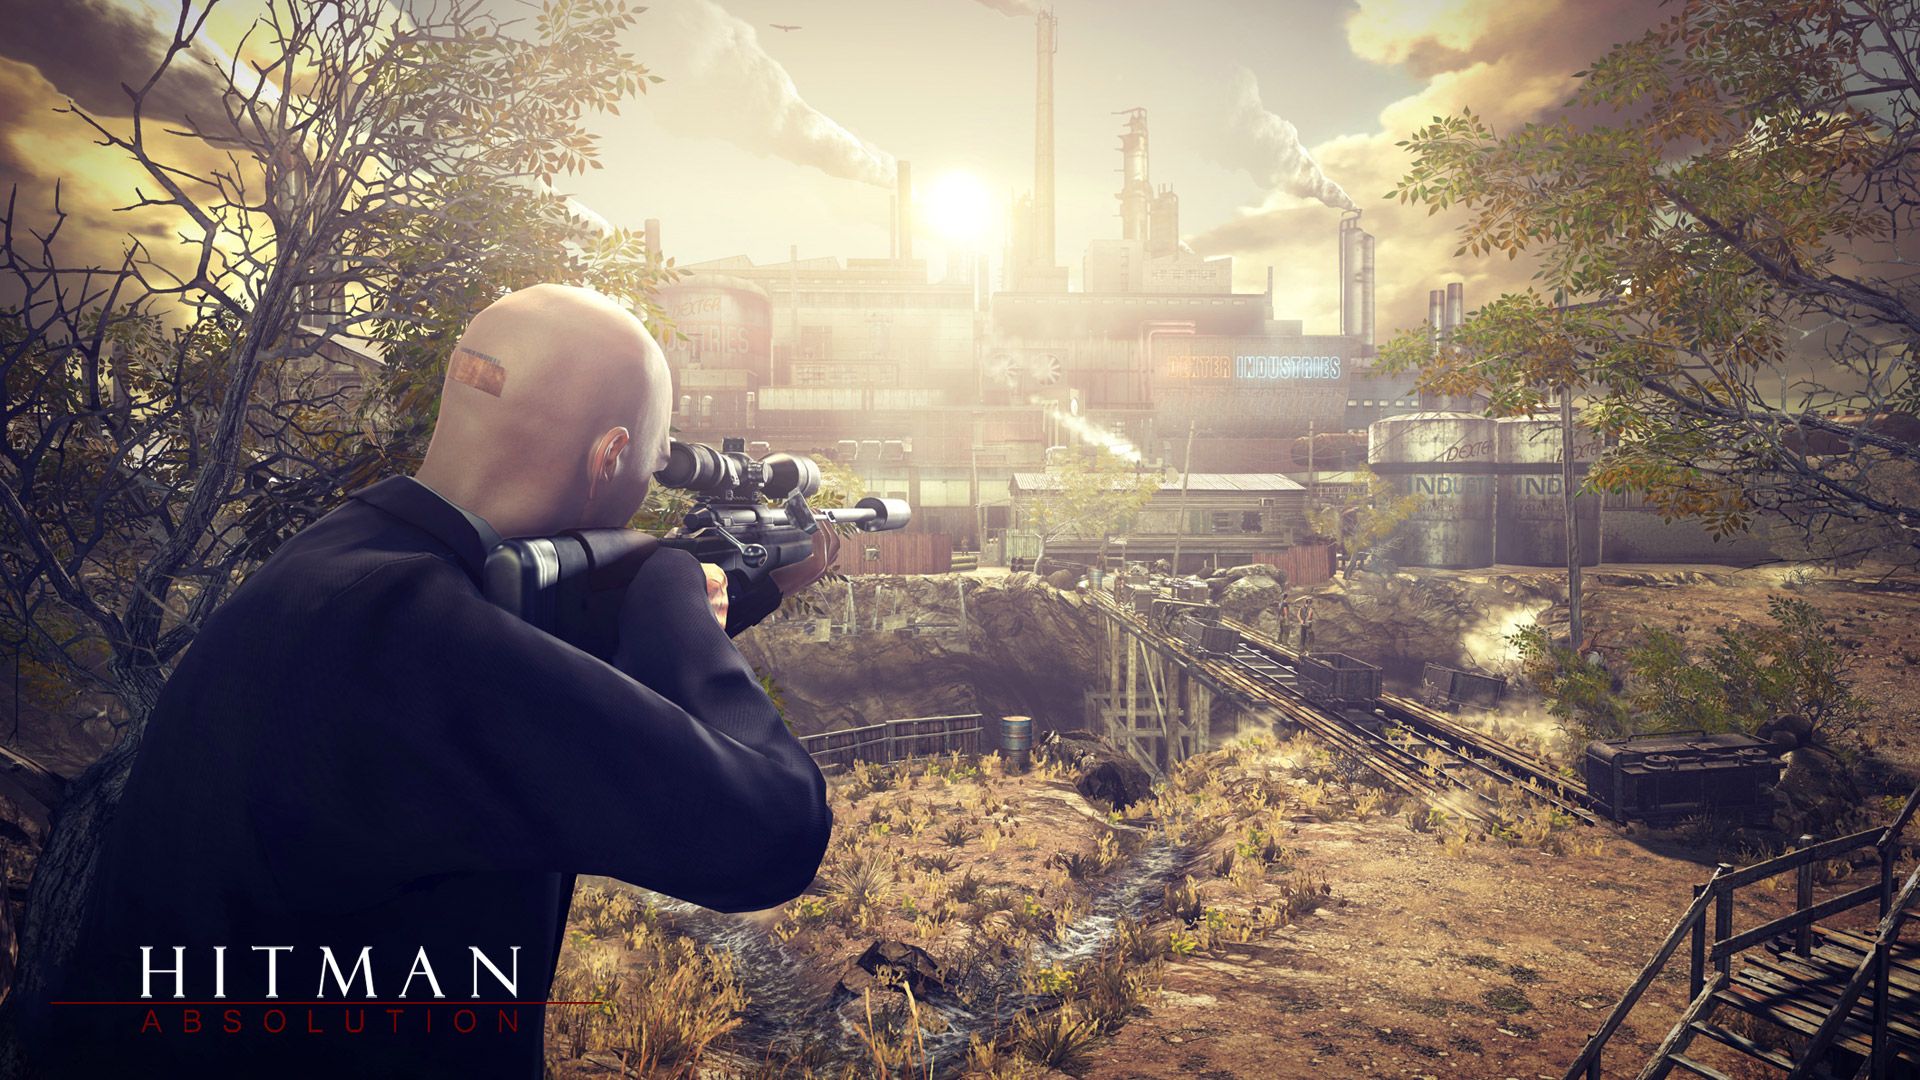 Wallpaper Hitman Absolution Agent 47 Stealth Game Gentleman Hitman  Background  Download Free Image